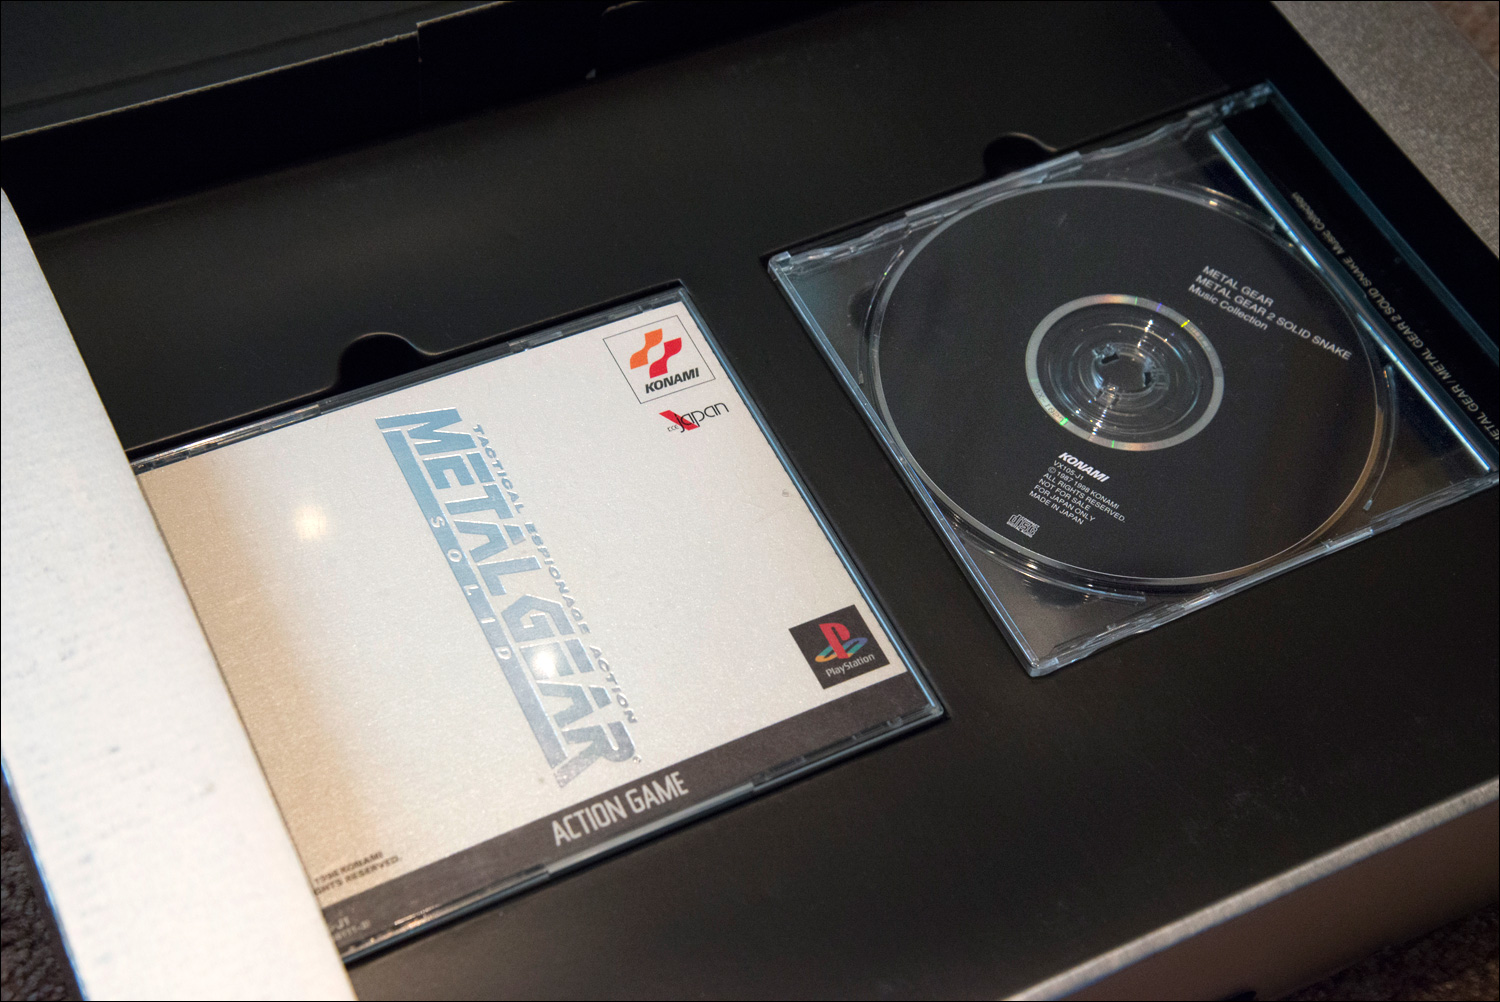 Metal-Gear-Solid-Premium-Package-Discs